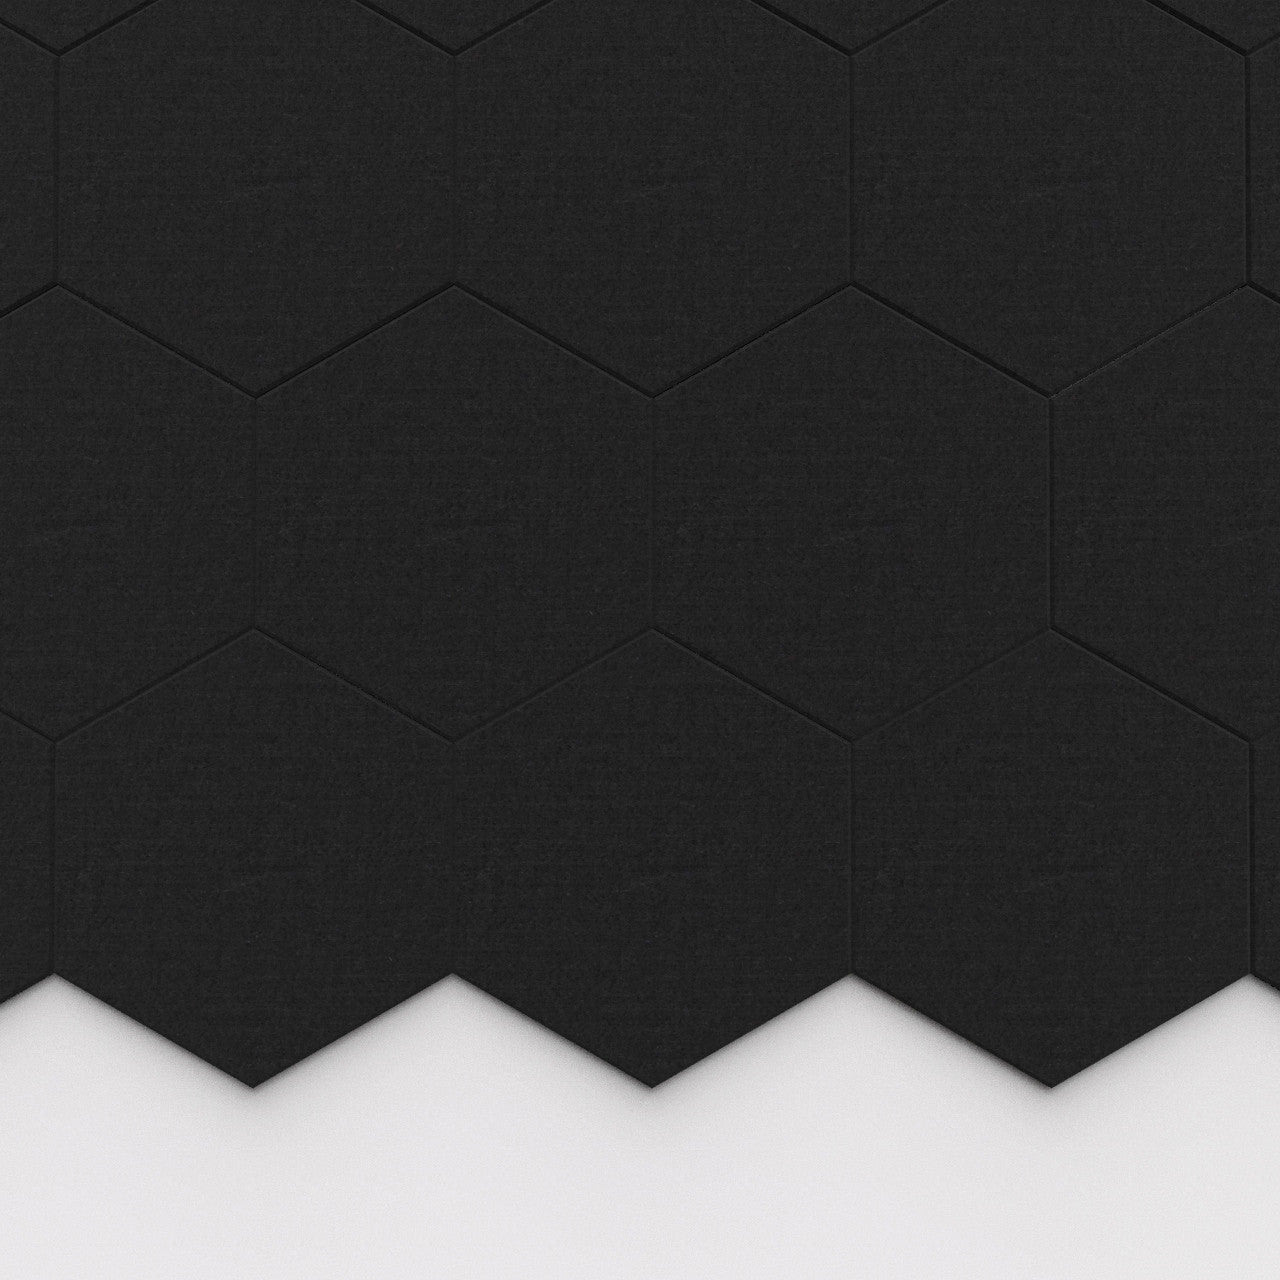 100% Recycled PET Felt Hexagon Plain Large Acoustic Tile Black | Plastock